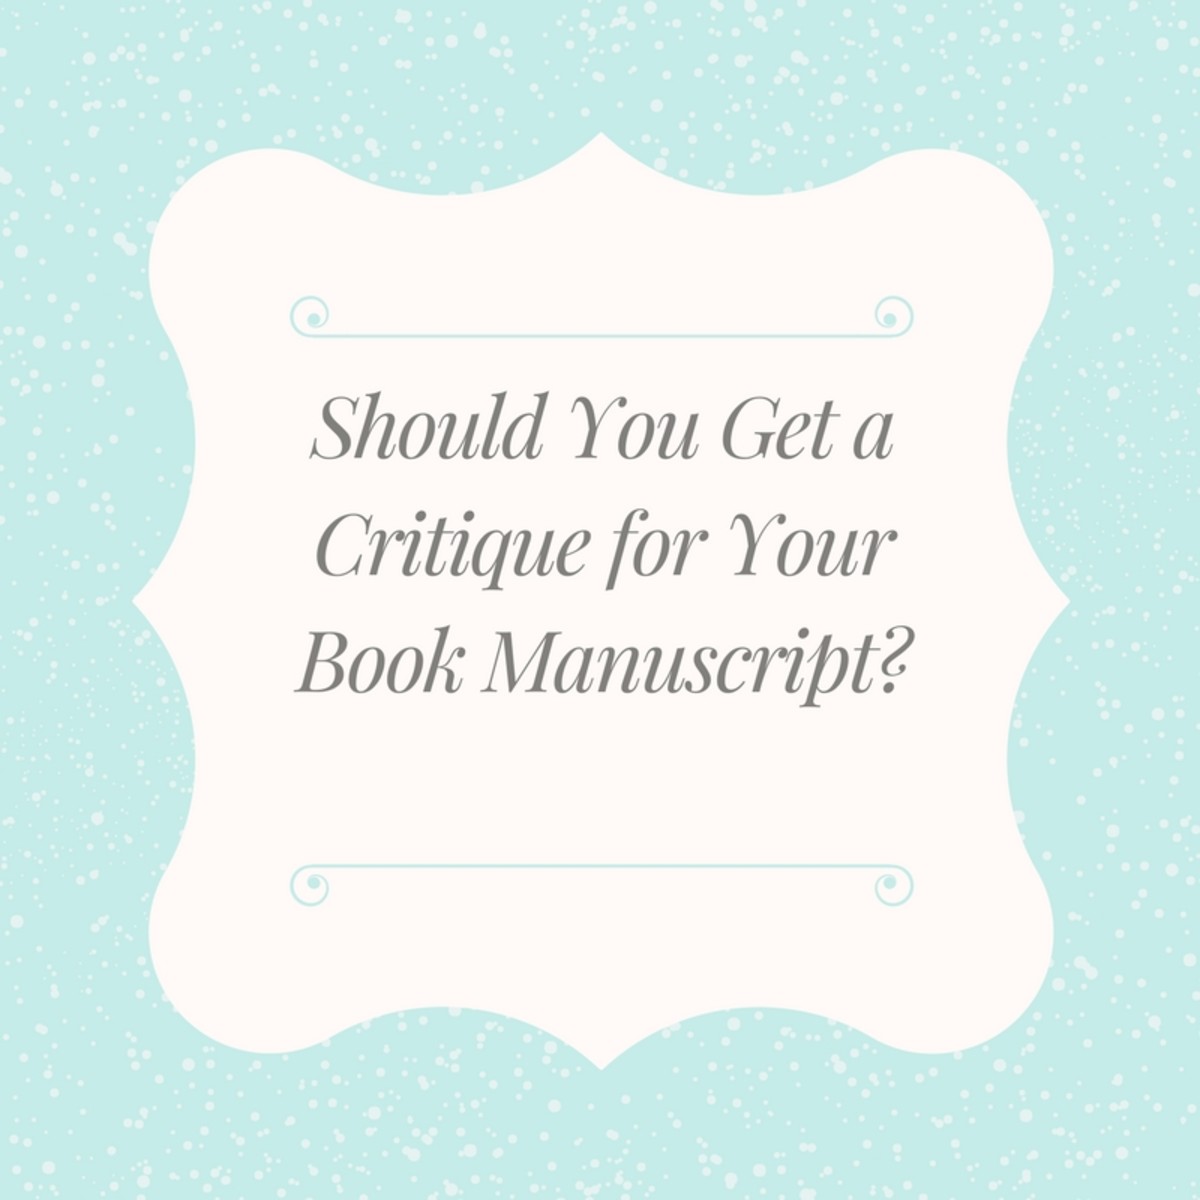 Should You Get a Critique for Your Book Manuscript?